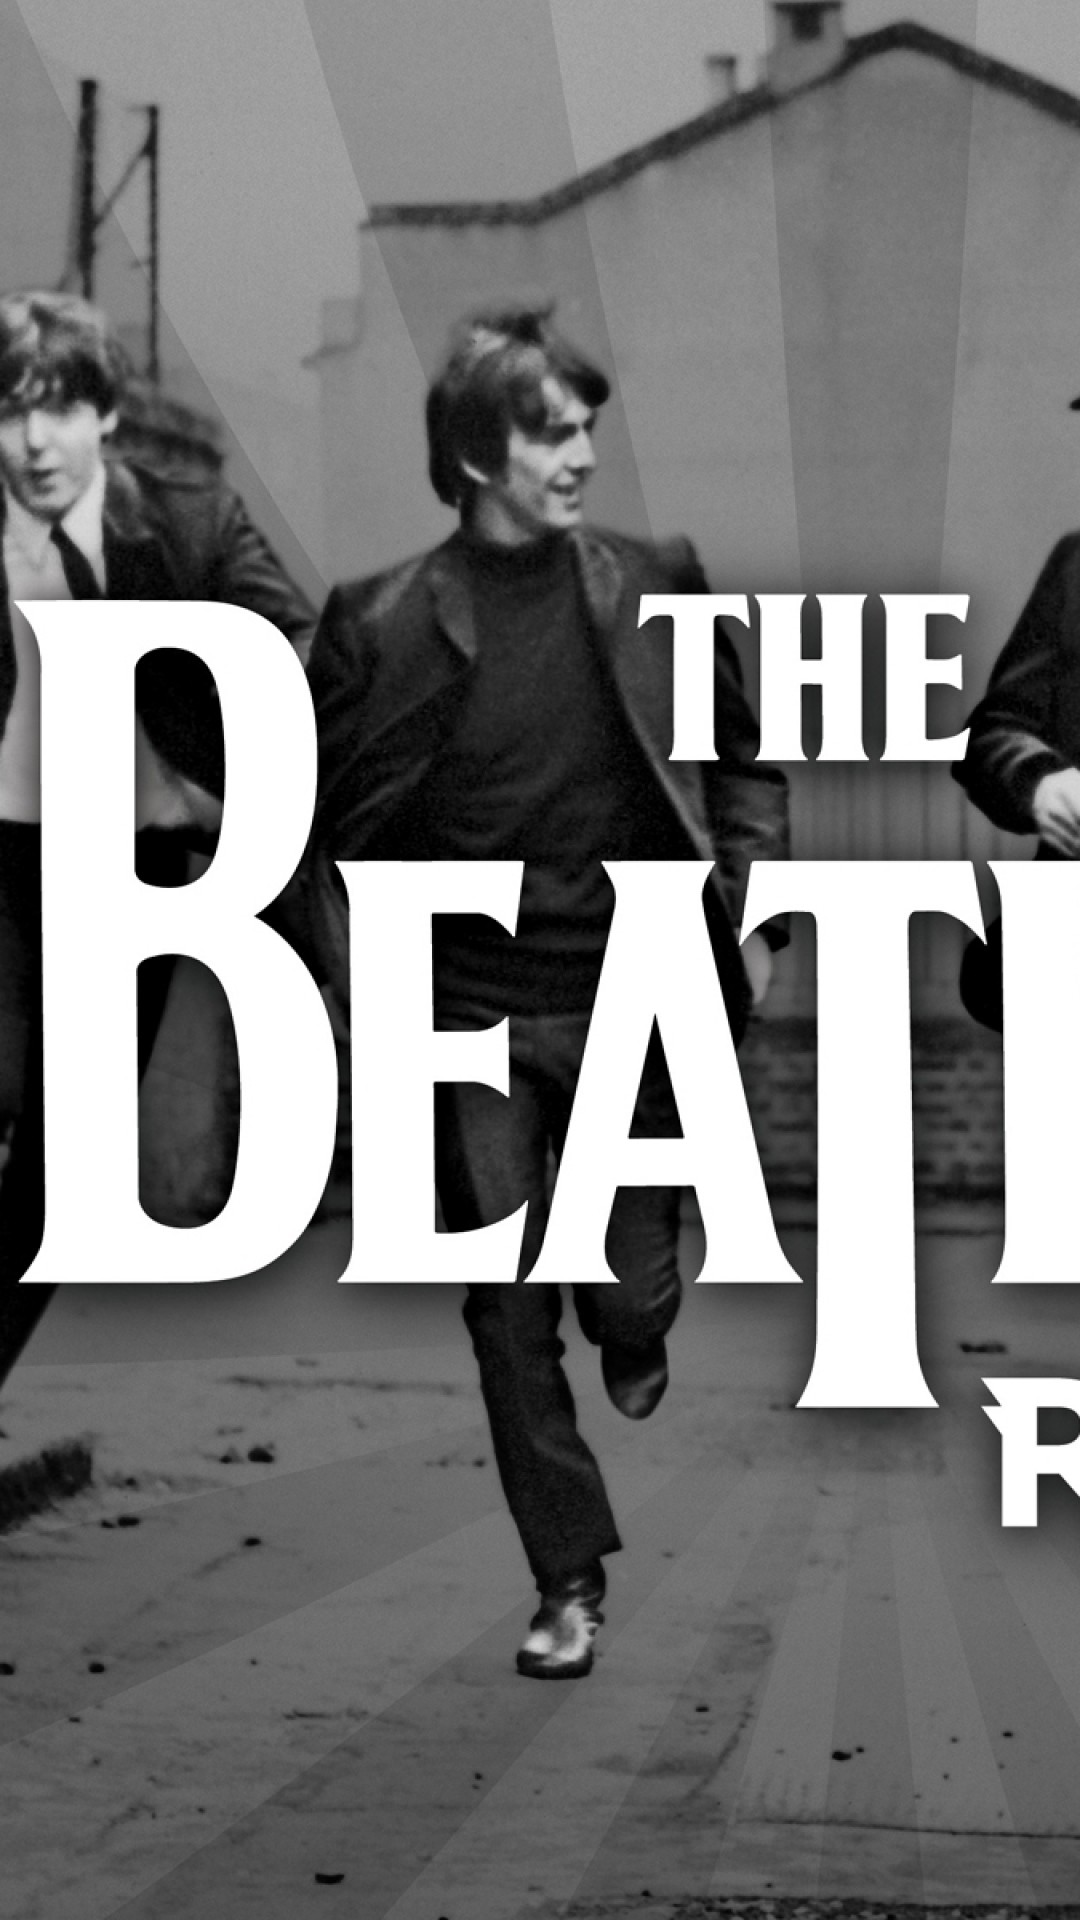 The Beatles Wallpaper IPhone.